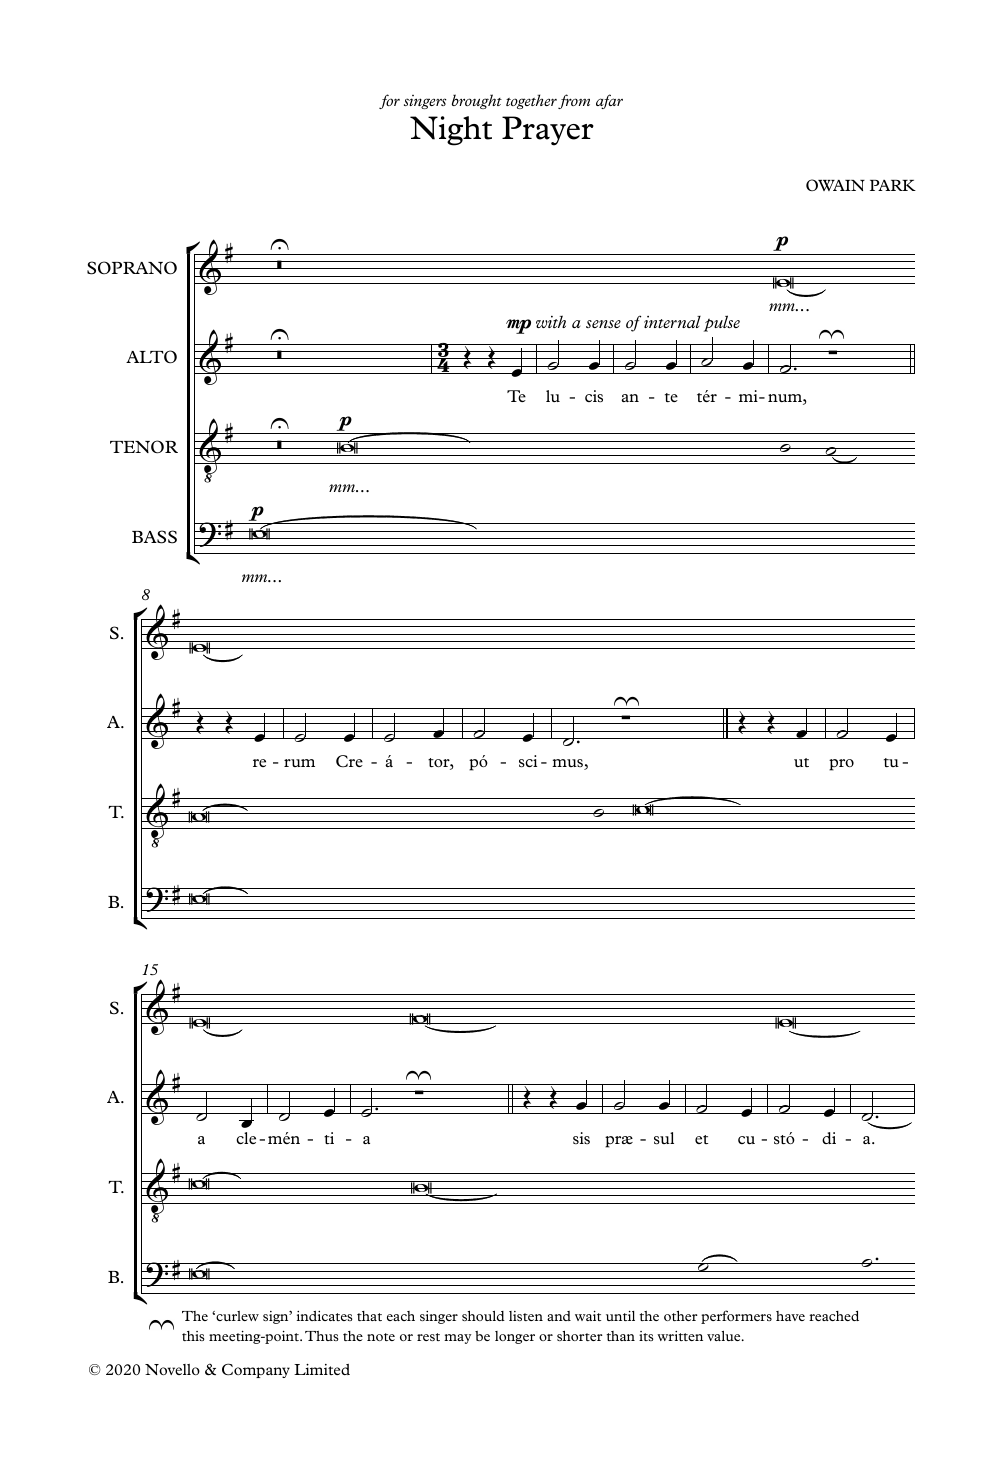 Owain Park Night Prayer Sheet Music Notes & Chords for SATB Choir - Download or Print PDF